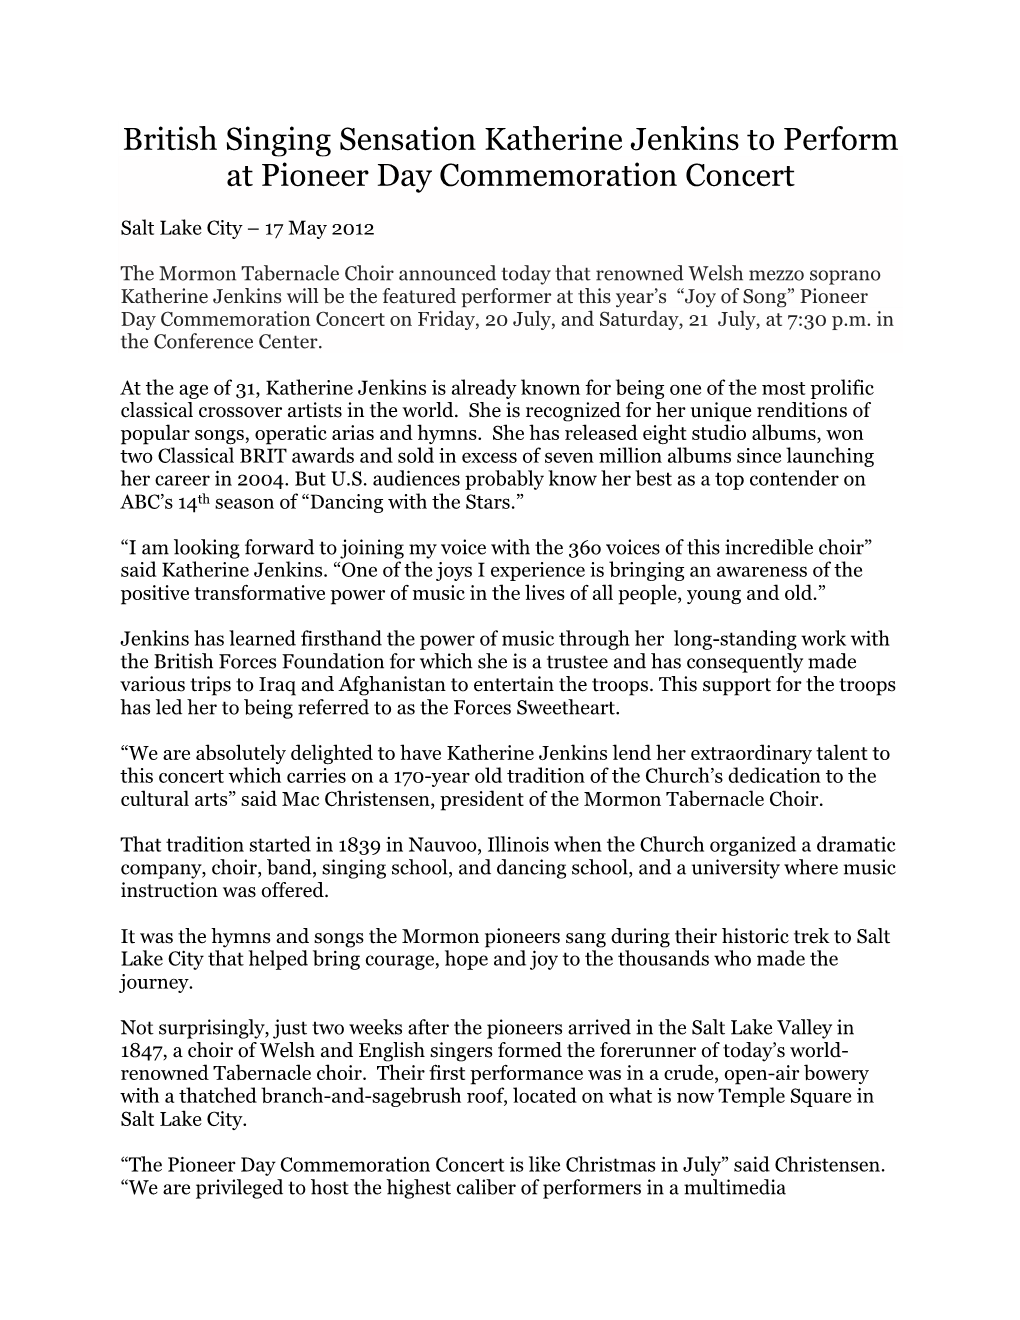 British Singing Sensation Katherine Jenkins to Perform at Pioneer Day Commemoration Concert